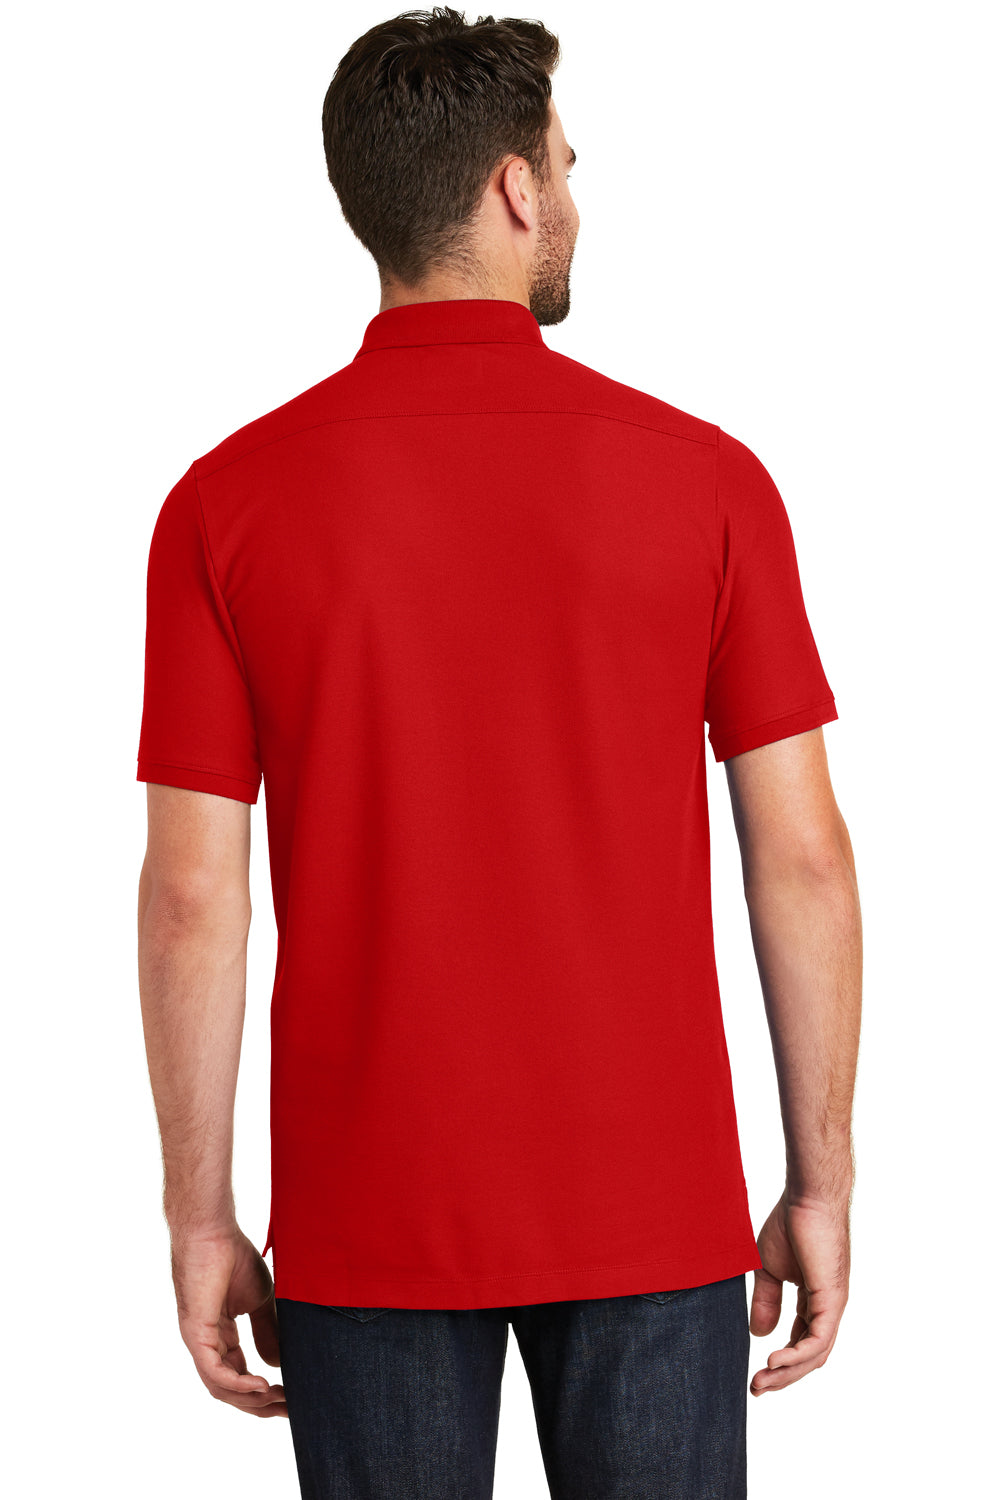 New Era NEA300 Mens Venue Home Plate Moisture Wicking Short Sleeve Polo Shirt Red Back